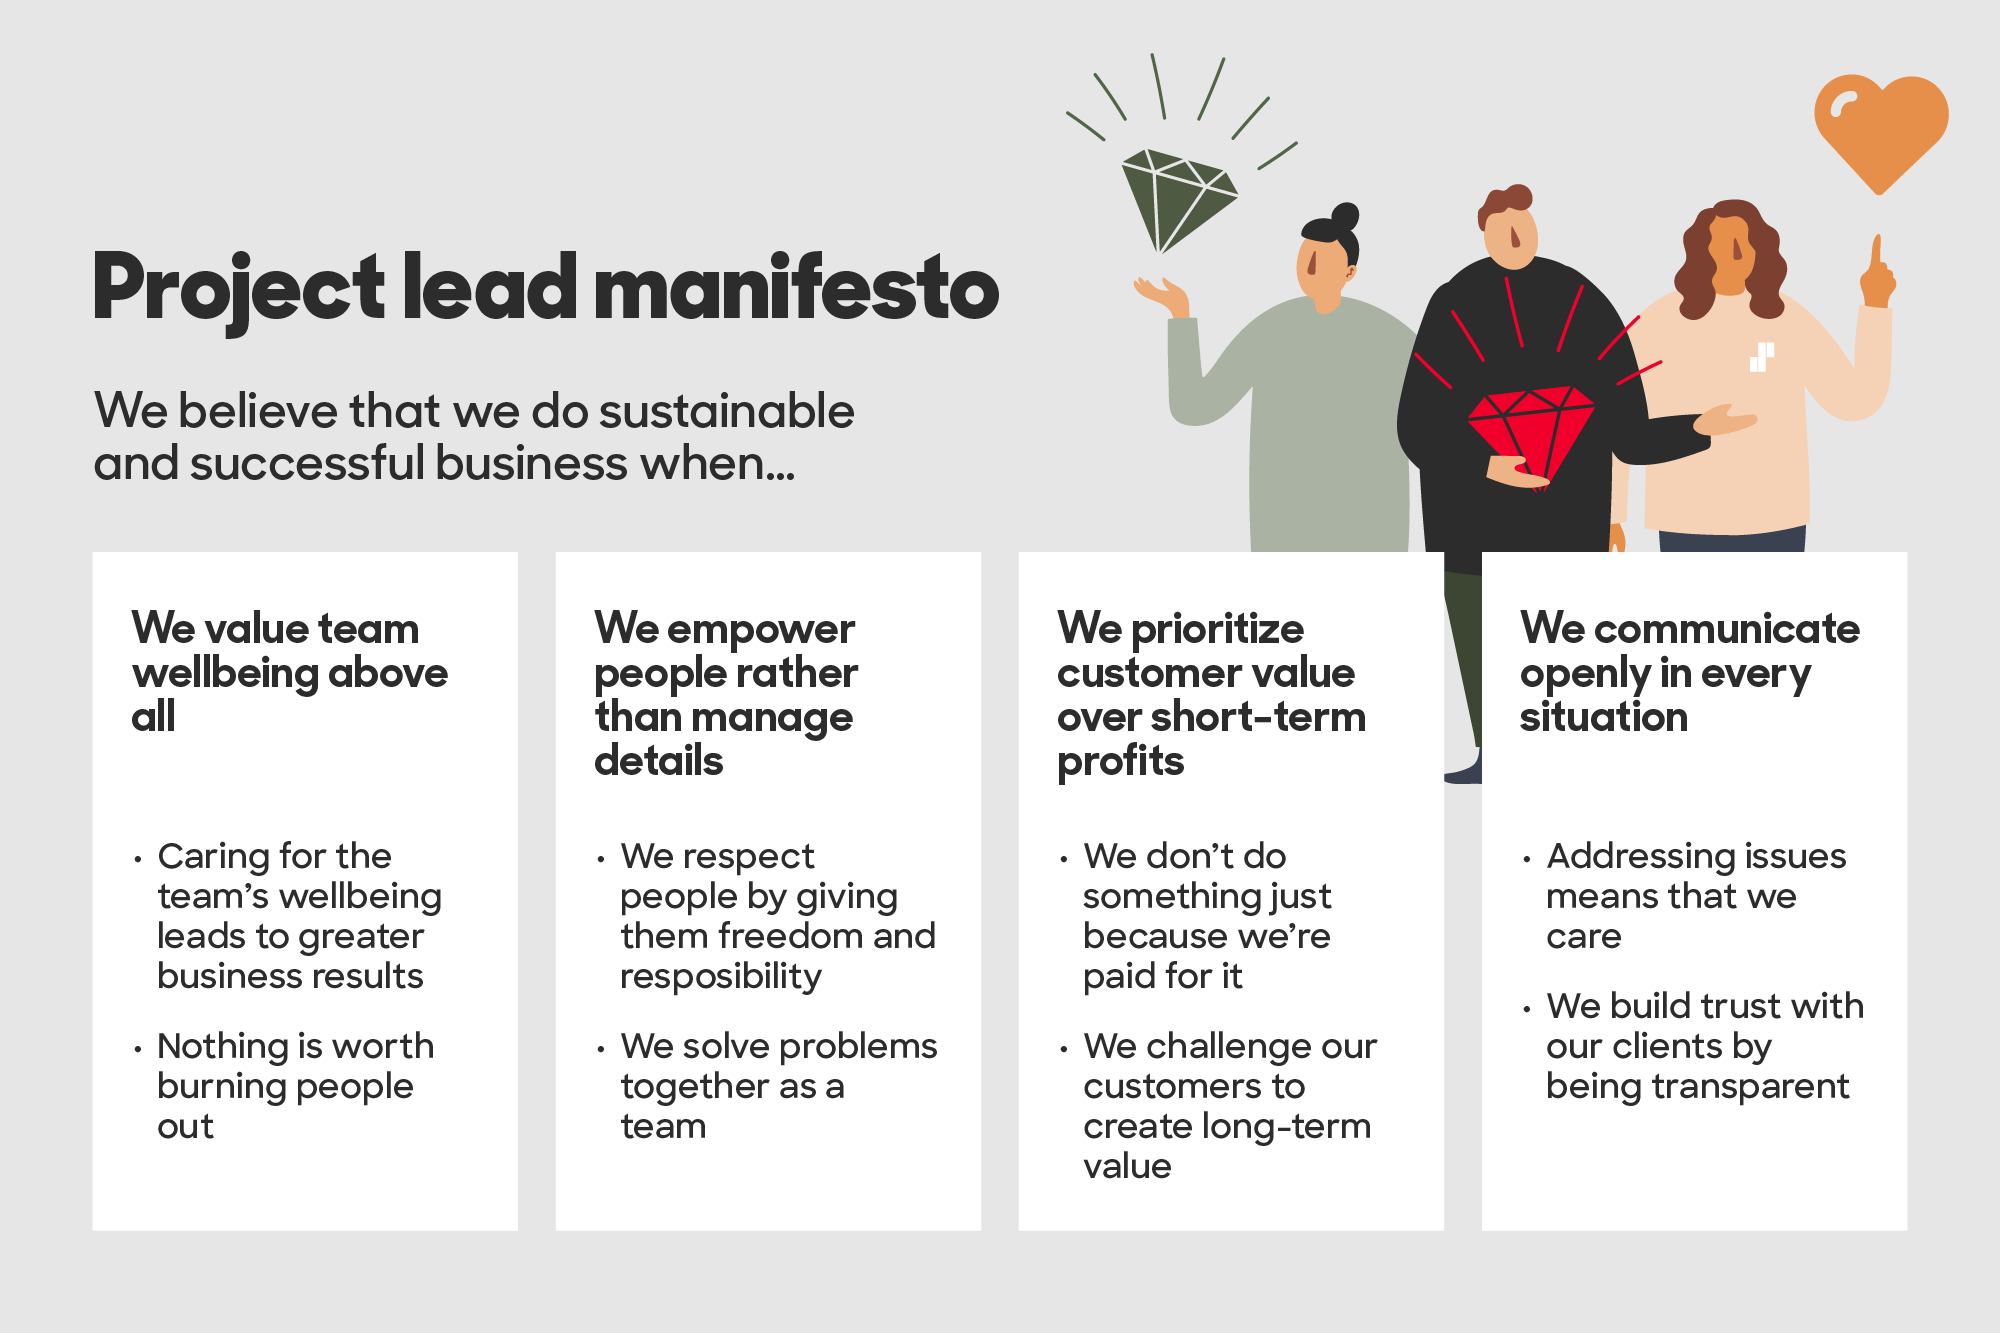 Project lead manifesto